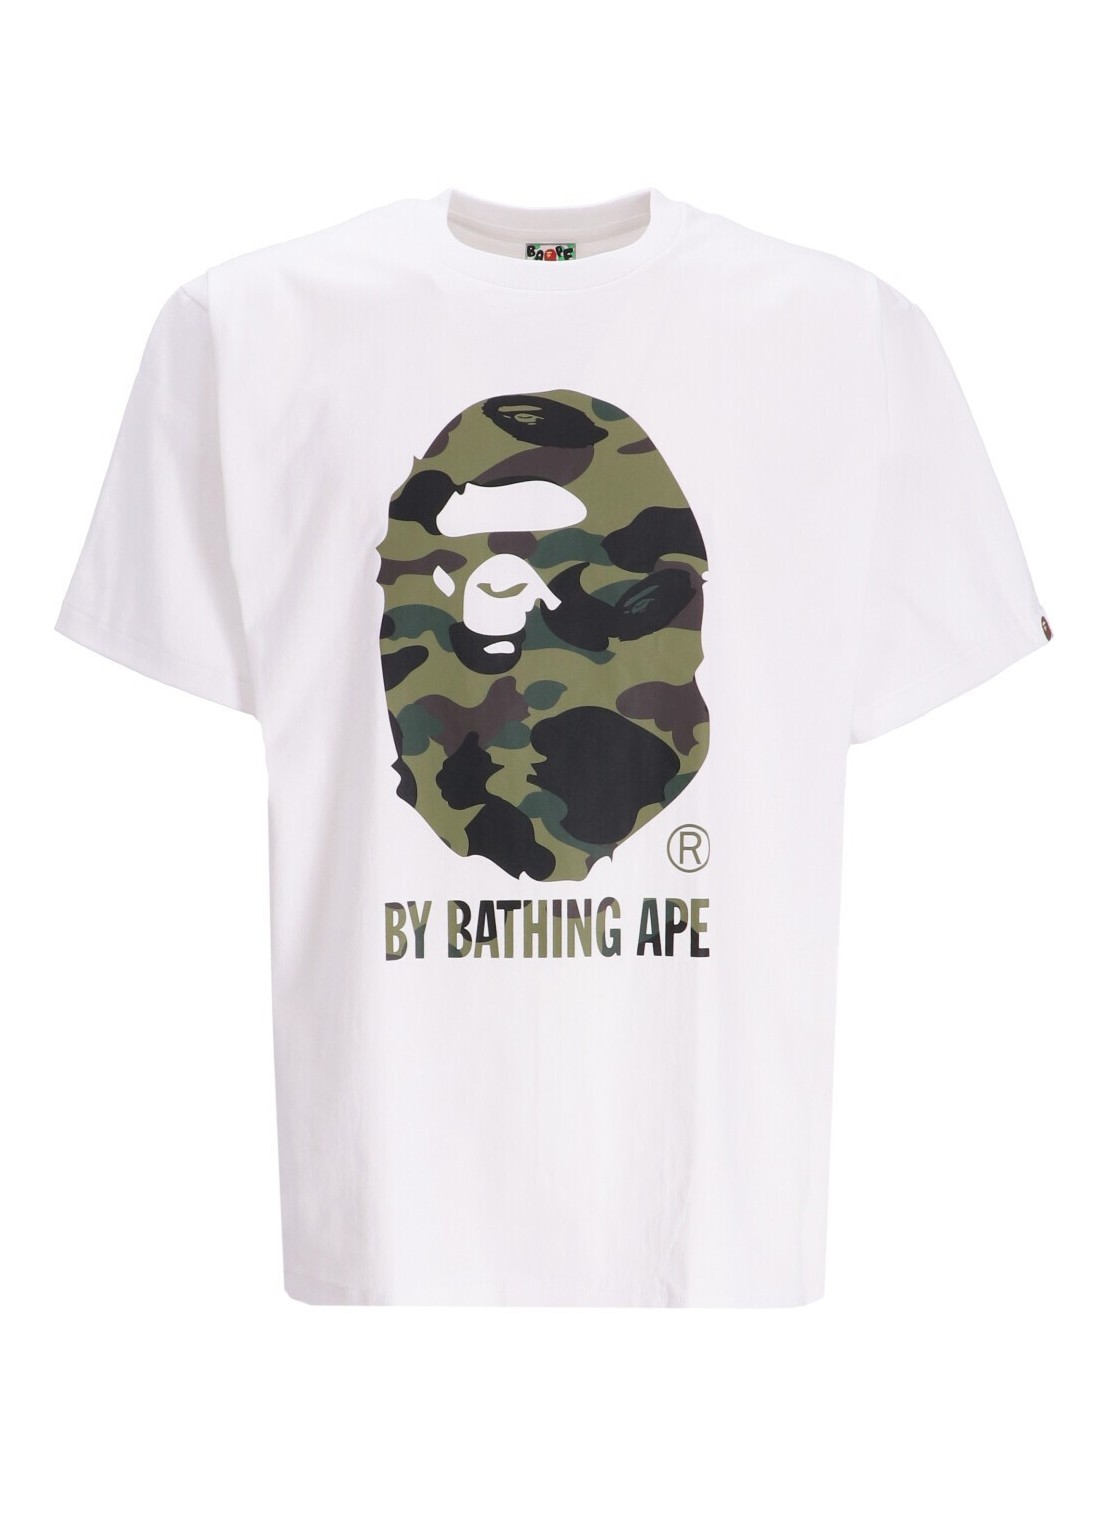 Camiseta bape 1st camo by bathing ape tee m - 001tei801009m whxgr talla XL
 